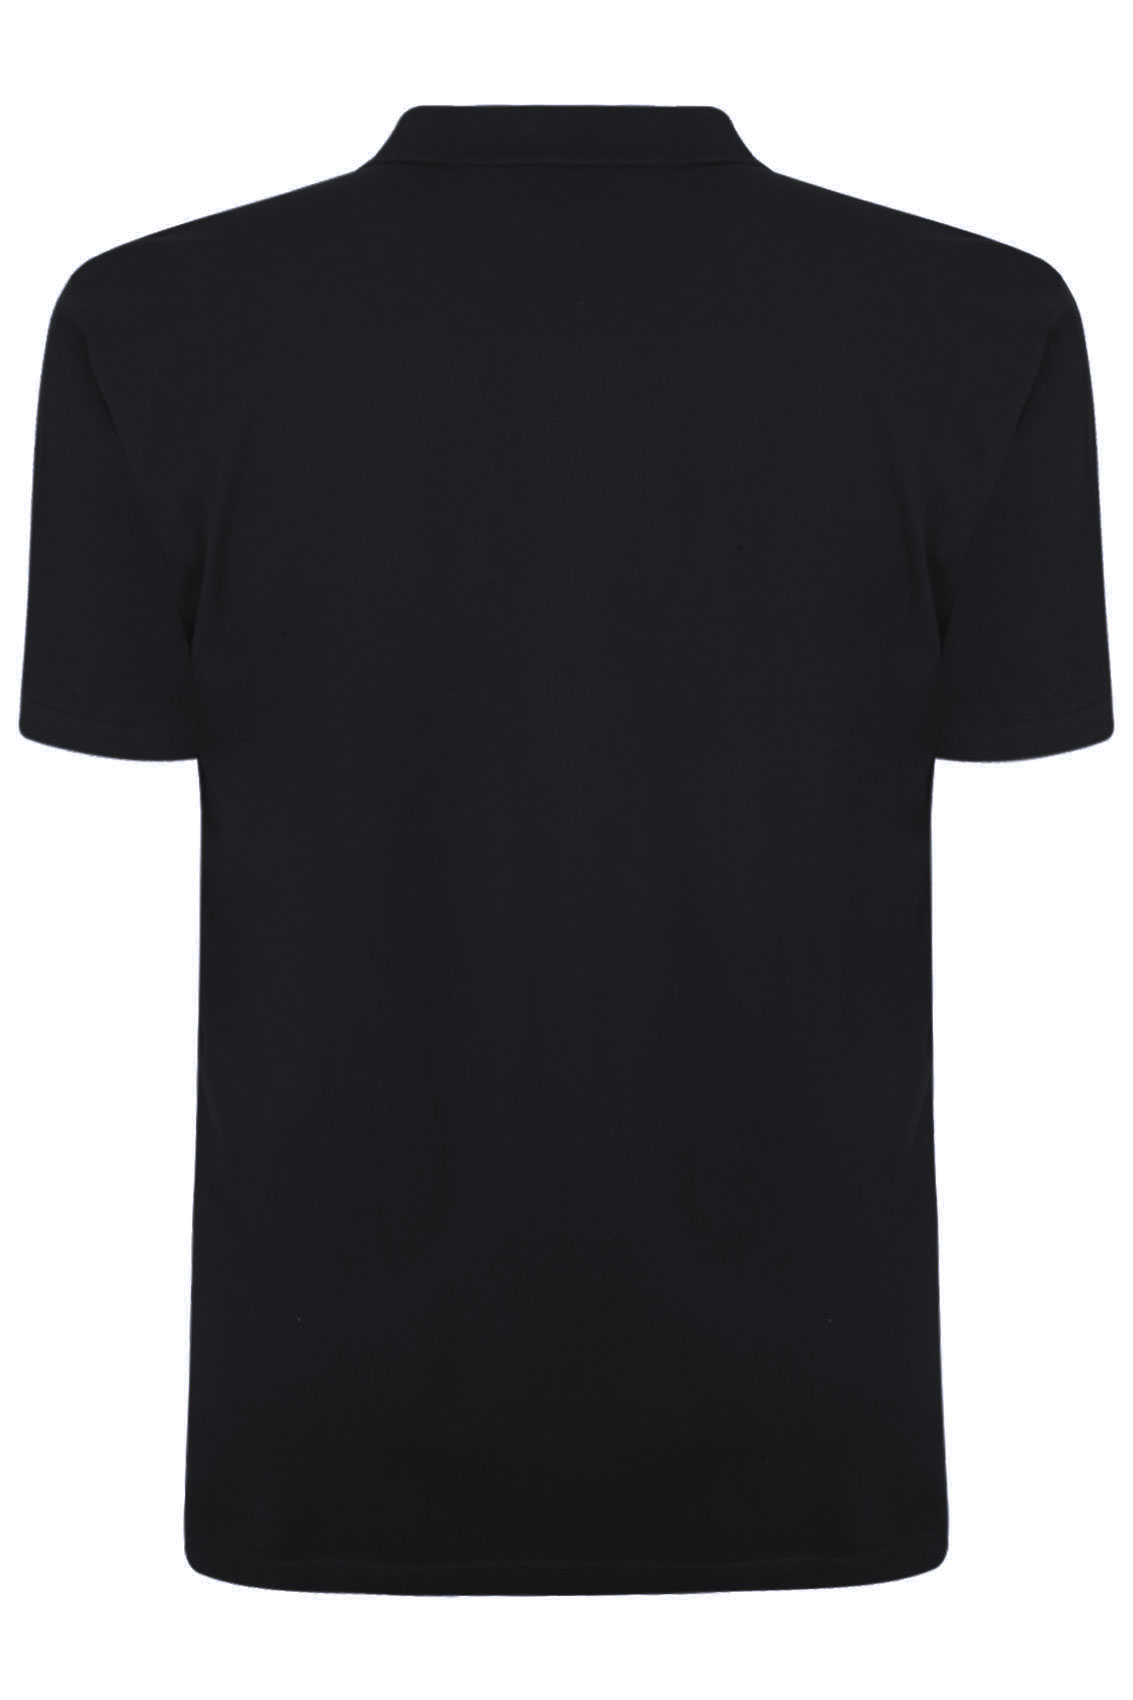 BadRhino Black  Plain Polo  Shirt  With Chest Pocket Extra 